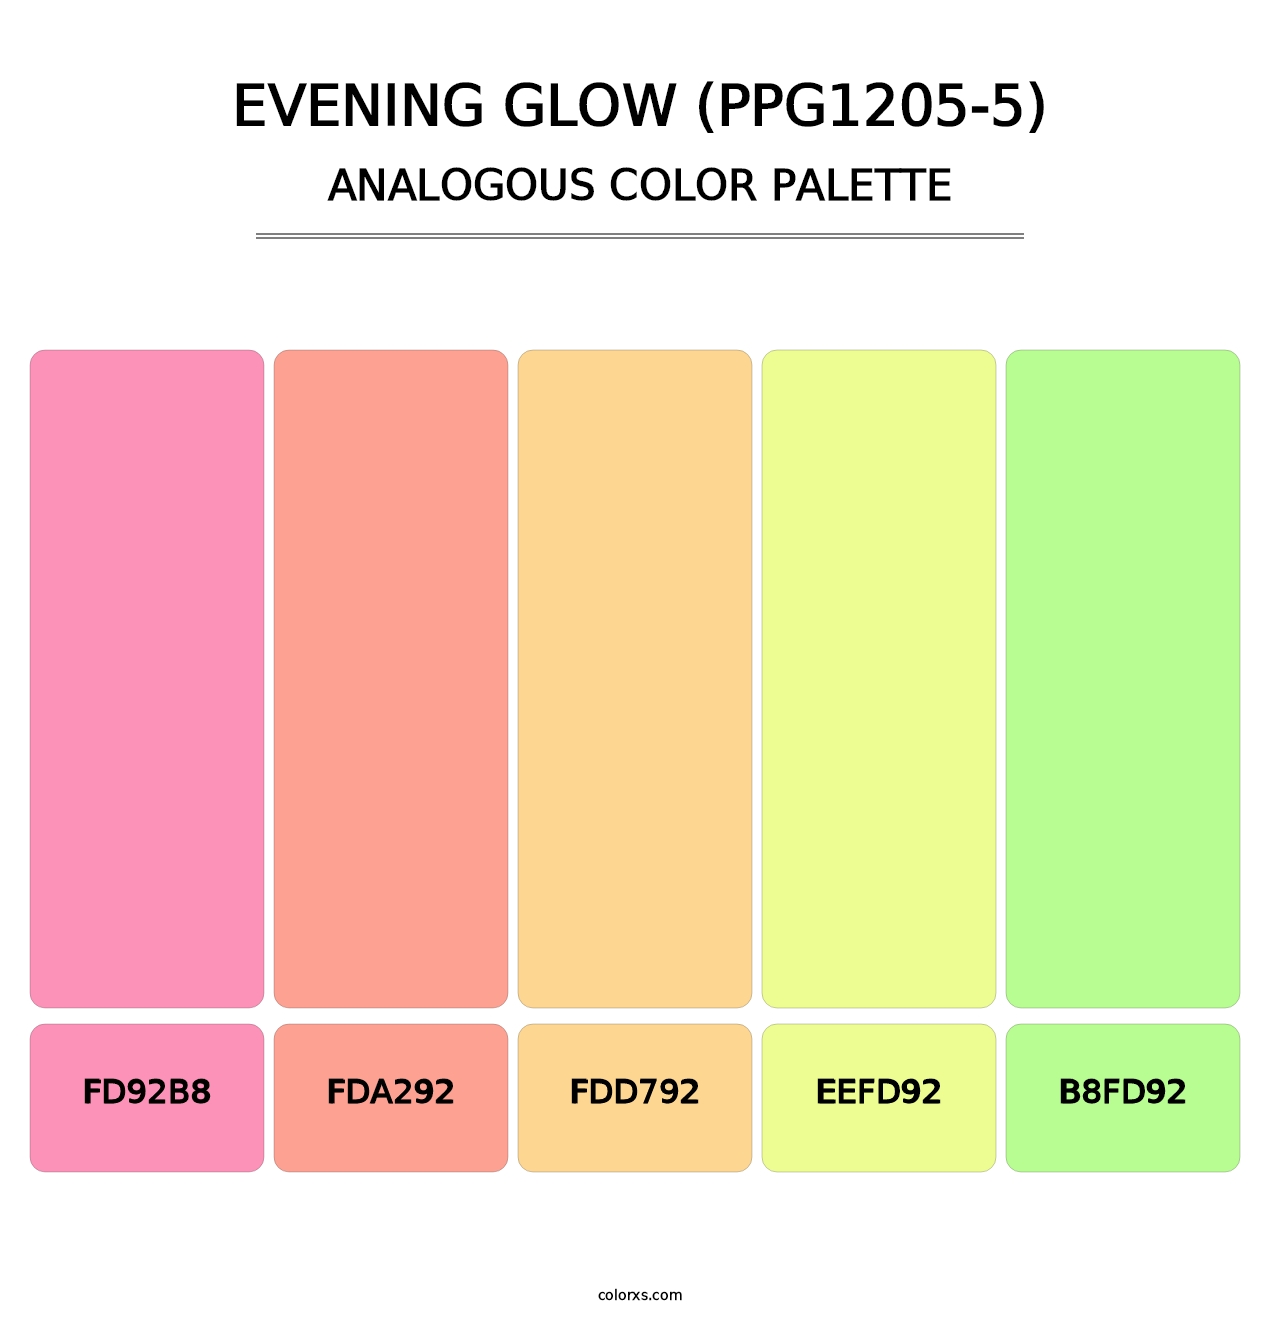 Evening Glow (PPG1205-5) - Analogous Color Palette